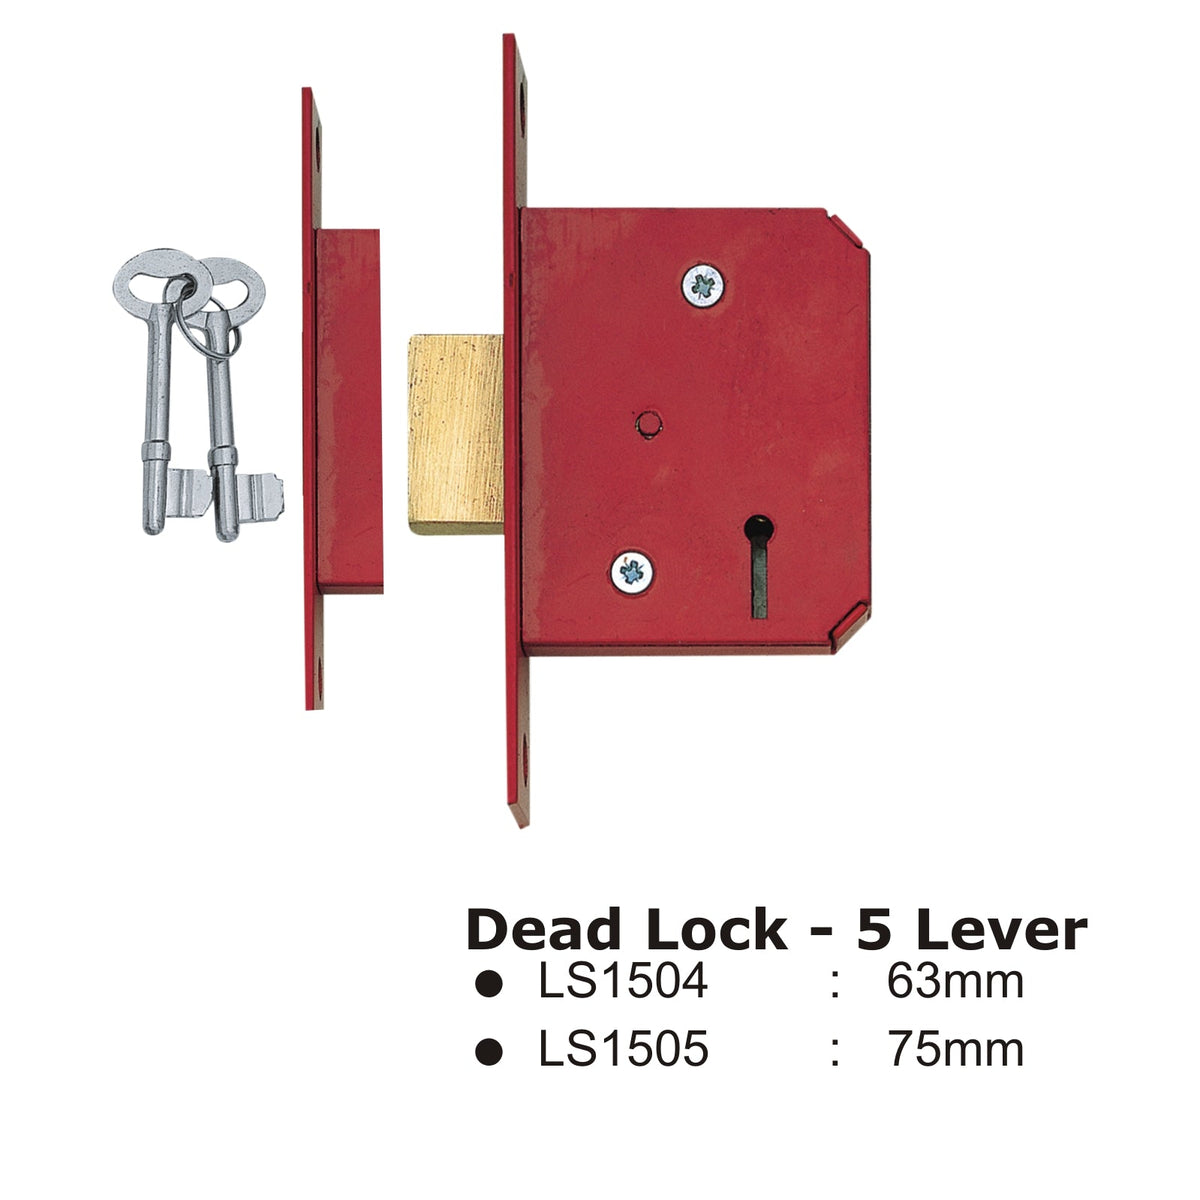 Dead Lock - 5 Lever -63mm